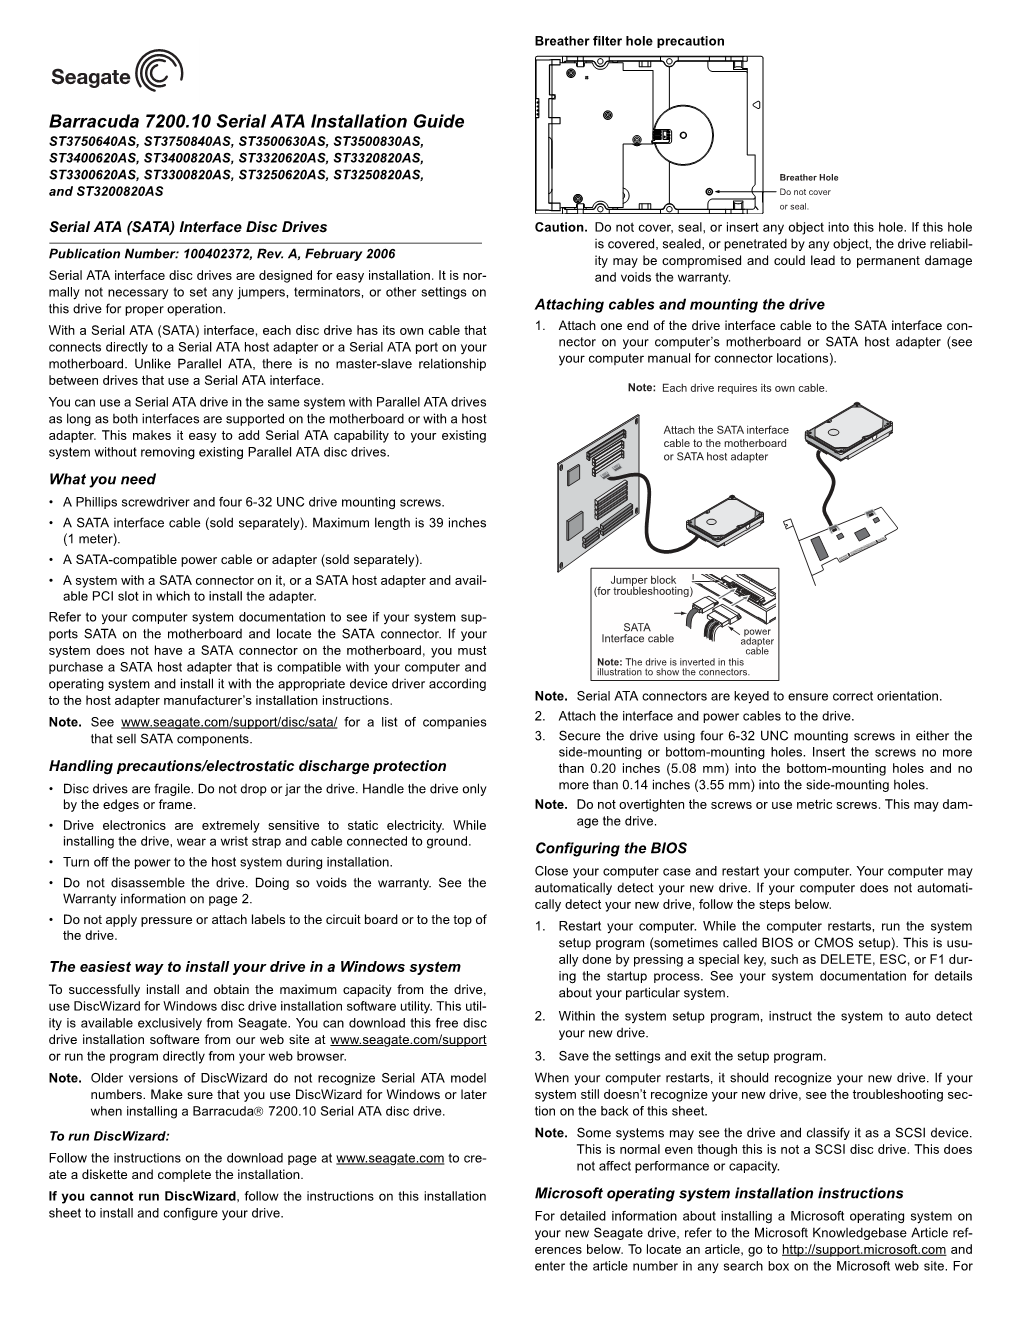 Barracuda 7200.10 Serial ATA Installation Guide